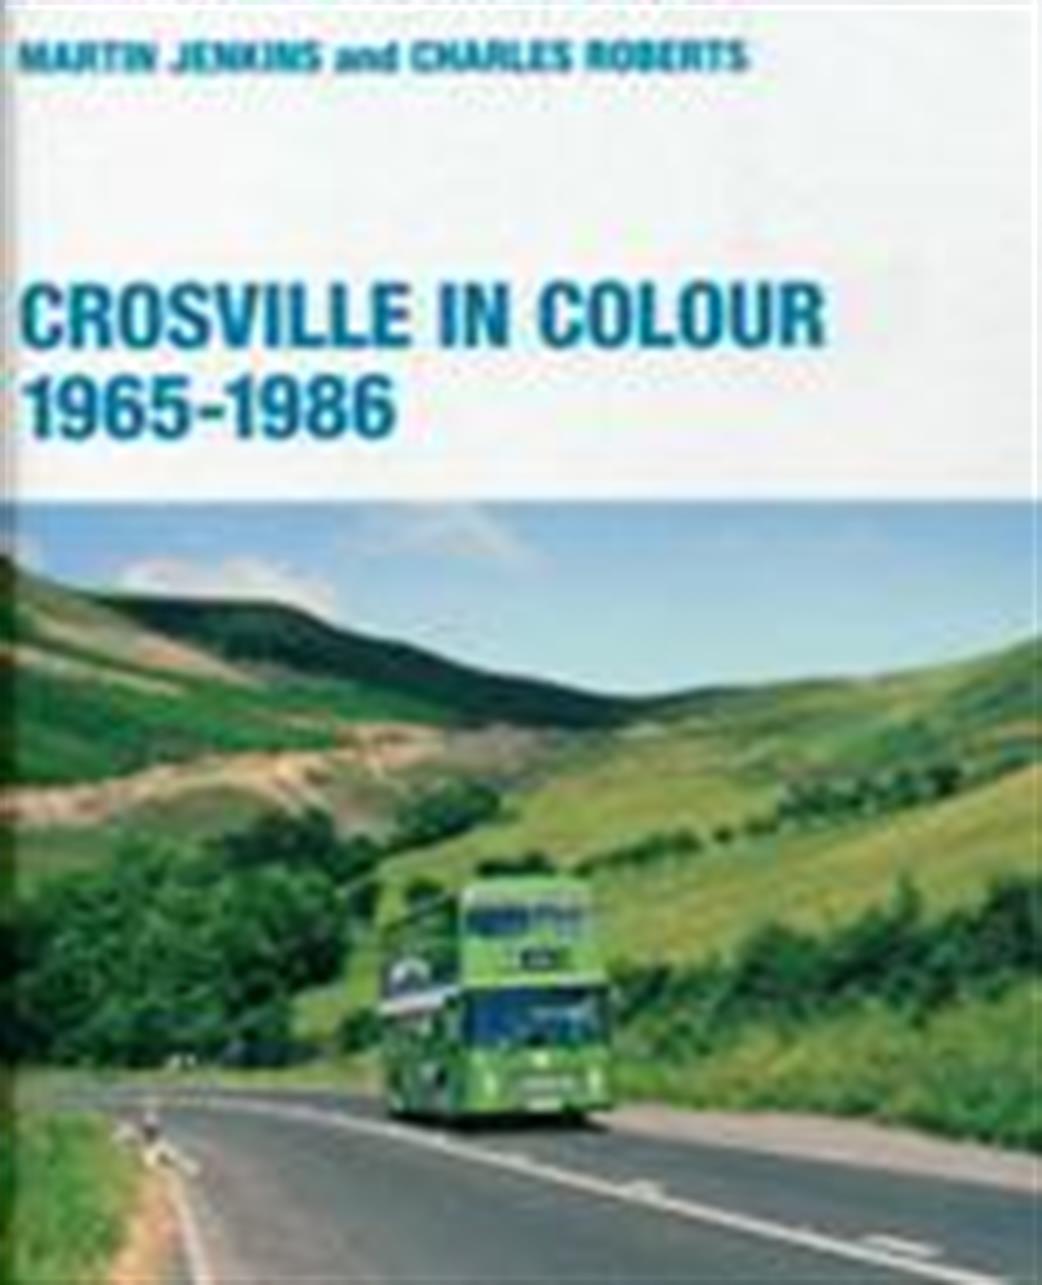 Ian Allan Publishing  9780711036444 Crosville In Colour 1965-1986 by M Jenkins & C Roberts